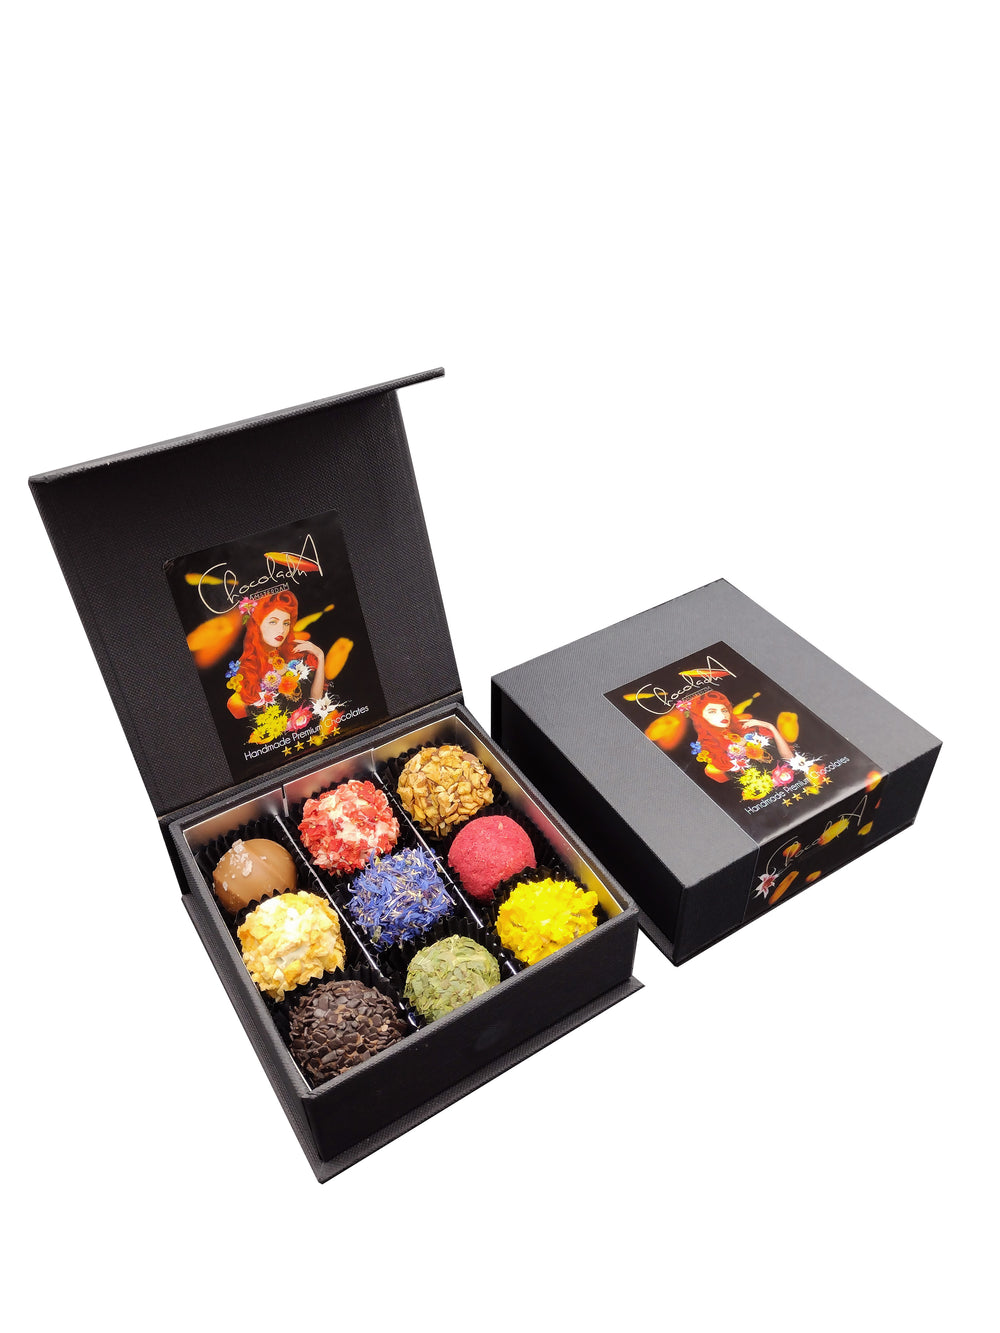 TRUFFLES-ChocolaDNA-Handmade Exclusive Chocolate Truffles - Set of 2 boxes (2 x 9 truffles)